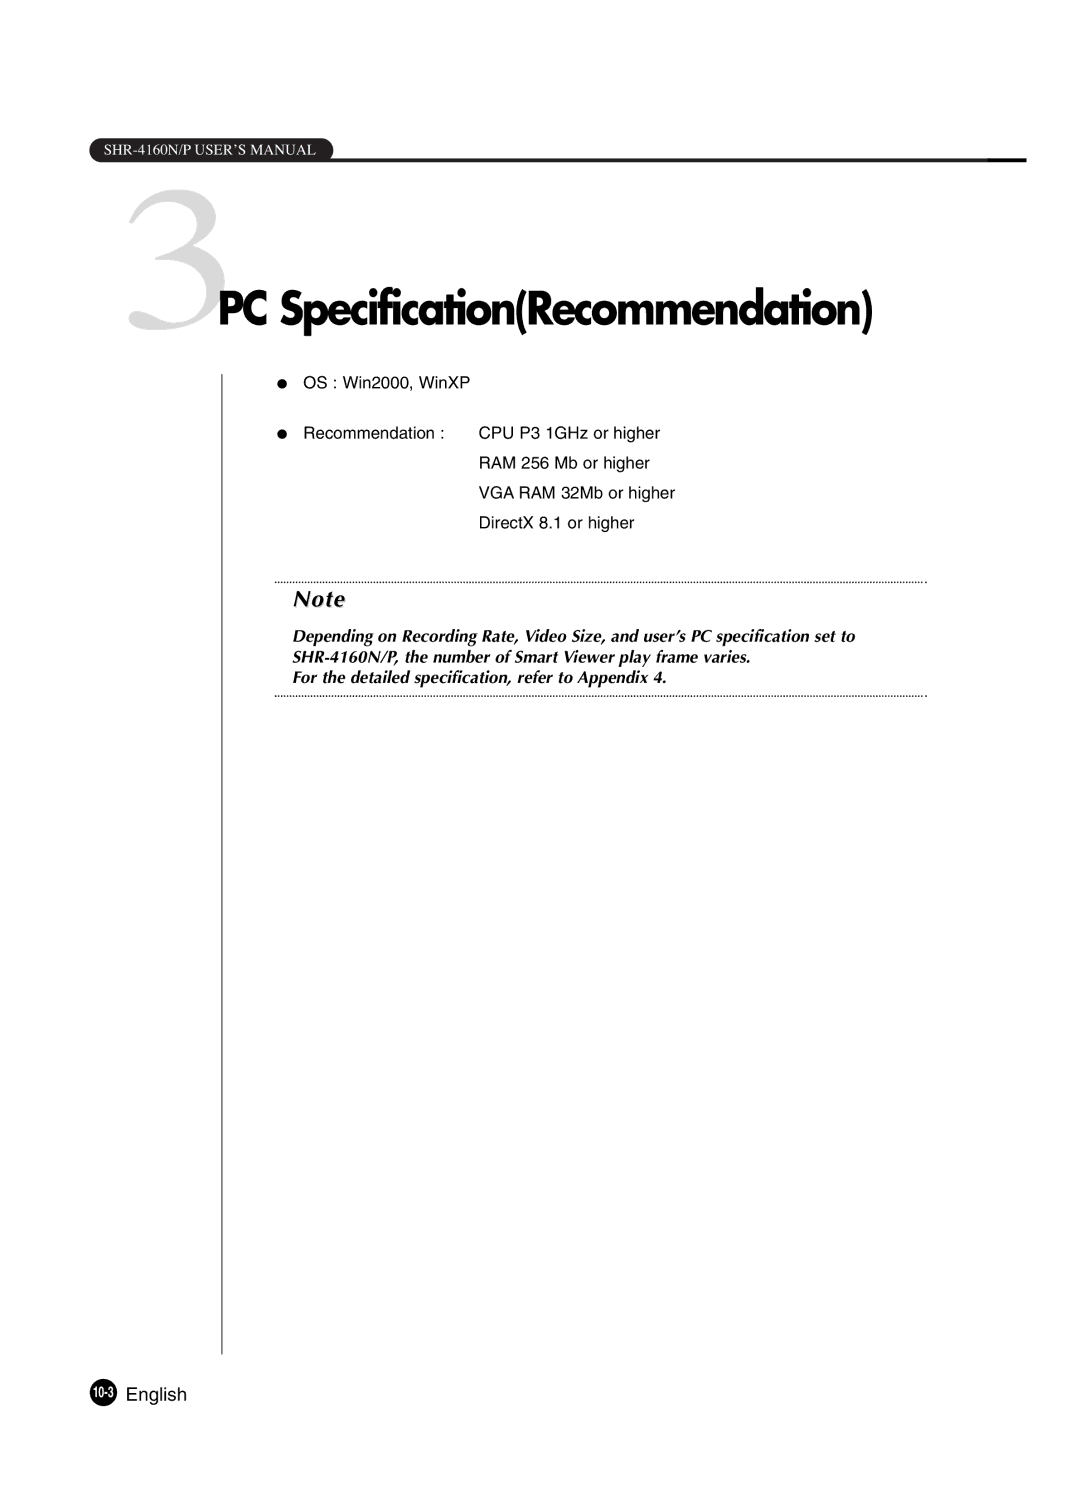 Samsung SHR-4160P manual 3PC SpecificationRecommendation, 10-3English 